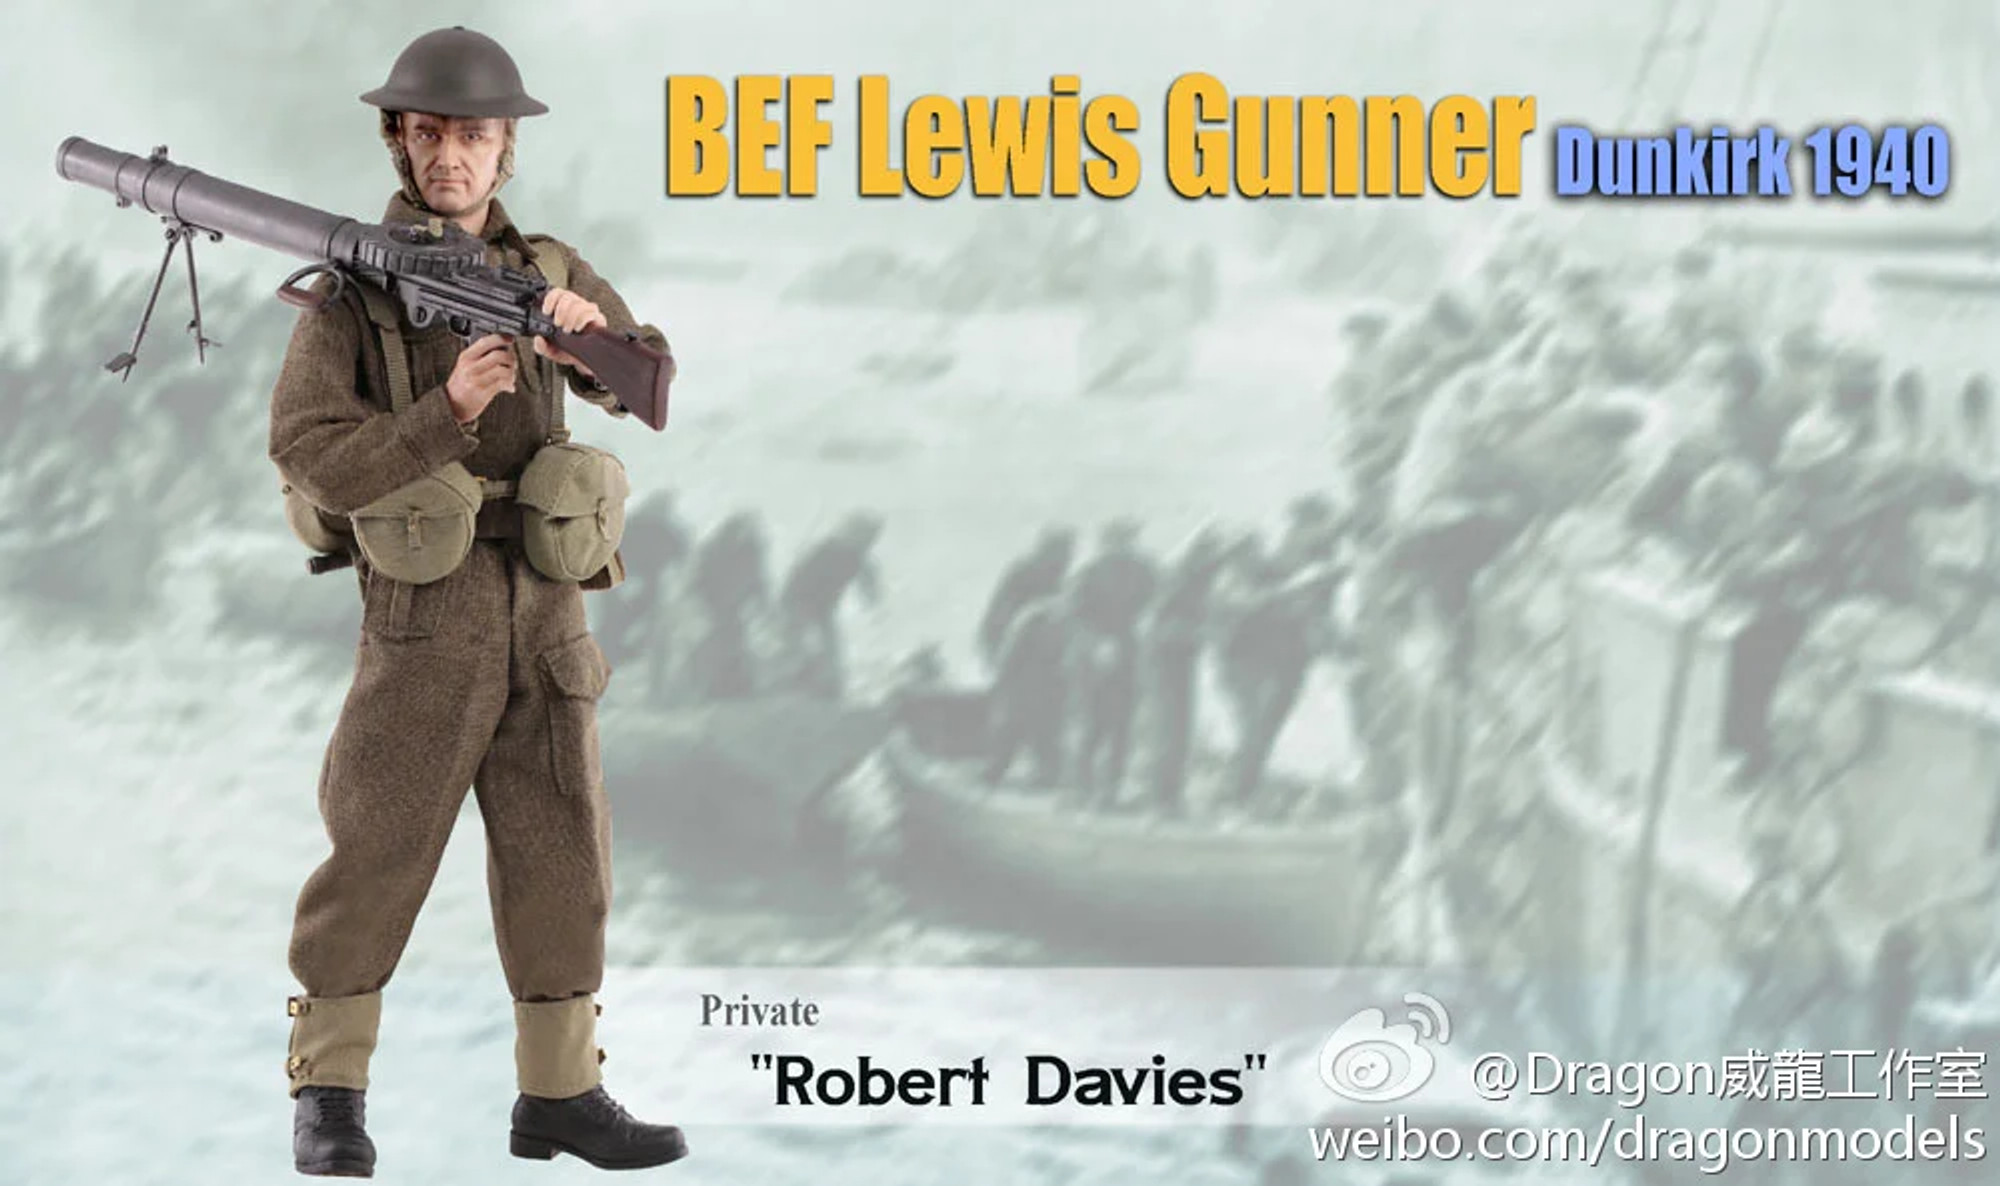 "Robert Davies", BEF Lewis Gunner (Private), Dunkirk 1940